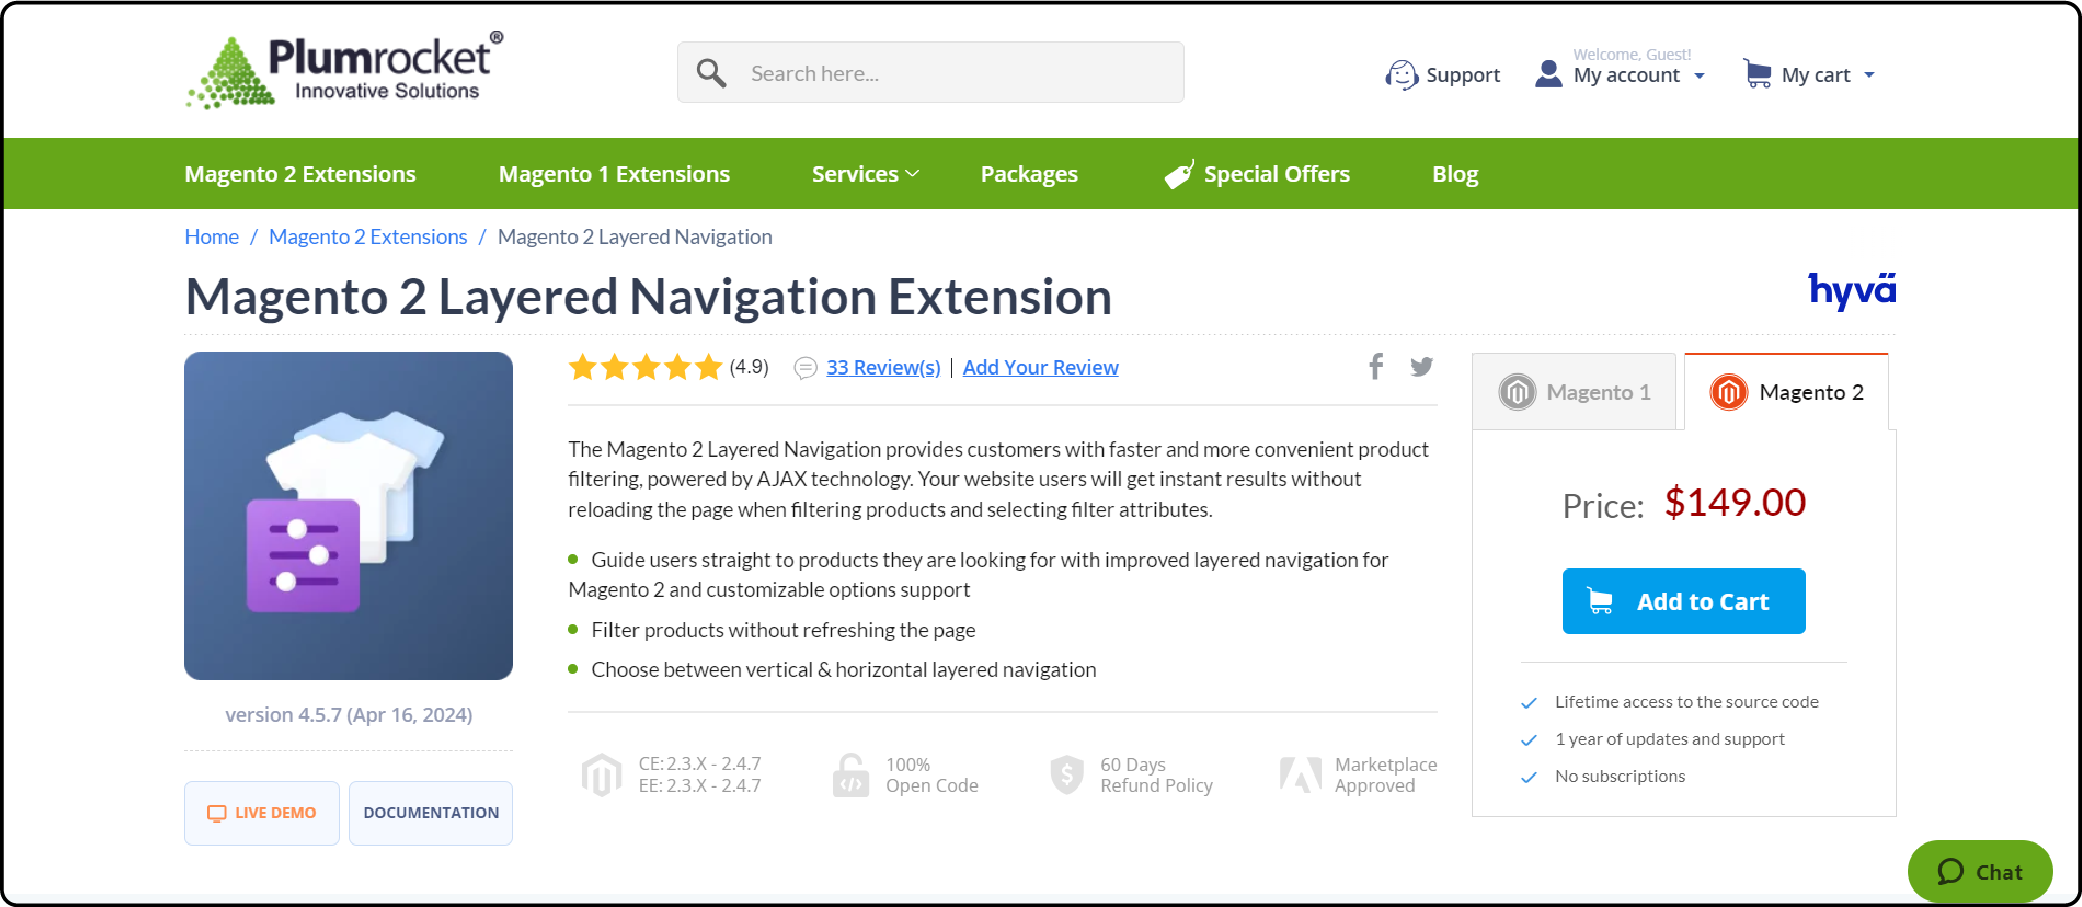 Top Magento 2 Layered Navigation Extension-Plumrocket